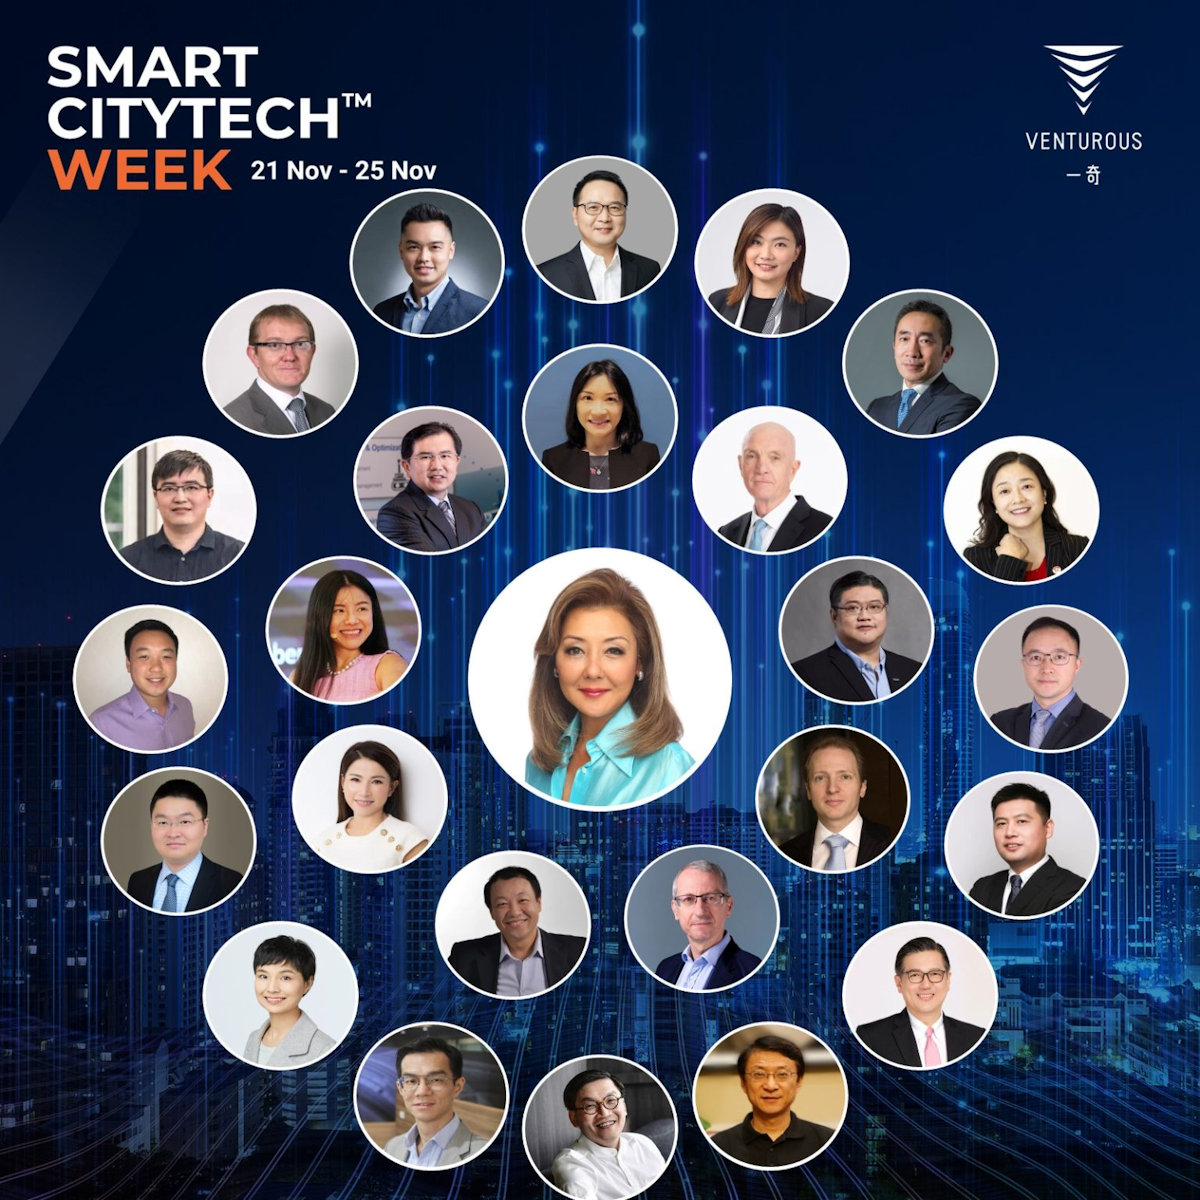 Smart Energy, Smart Computing, Smart Buildings, y Smart City Management son los protagonistas de la Semana Smart Citytech™ de Venturous